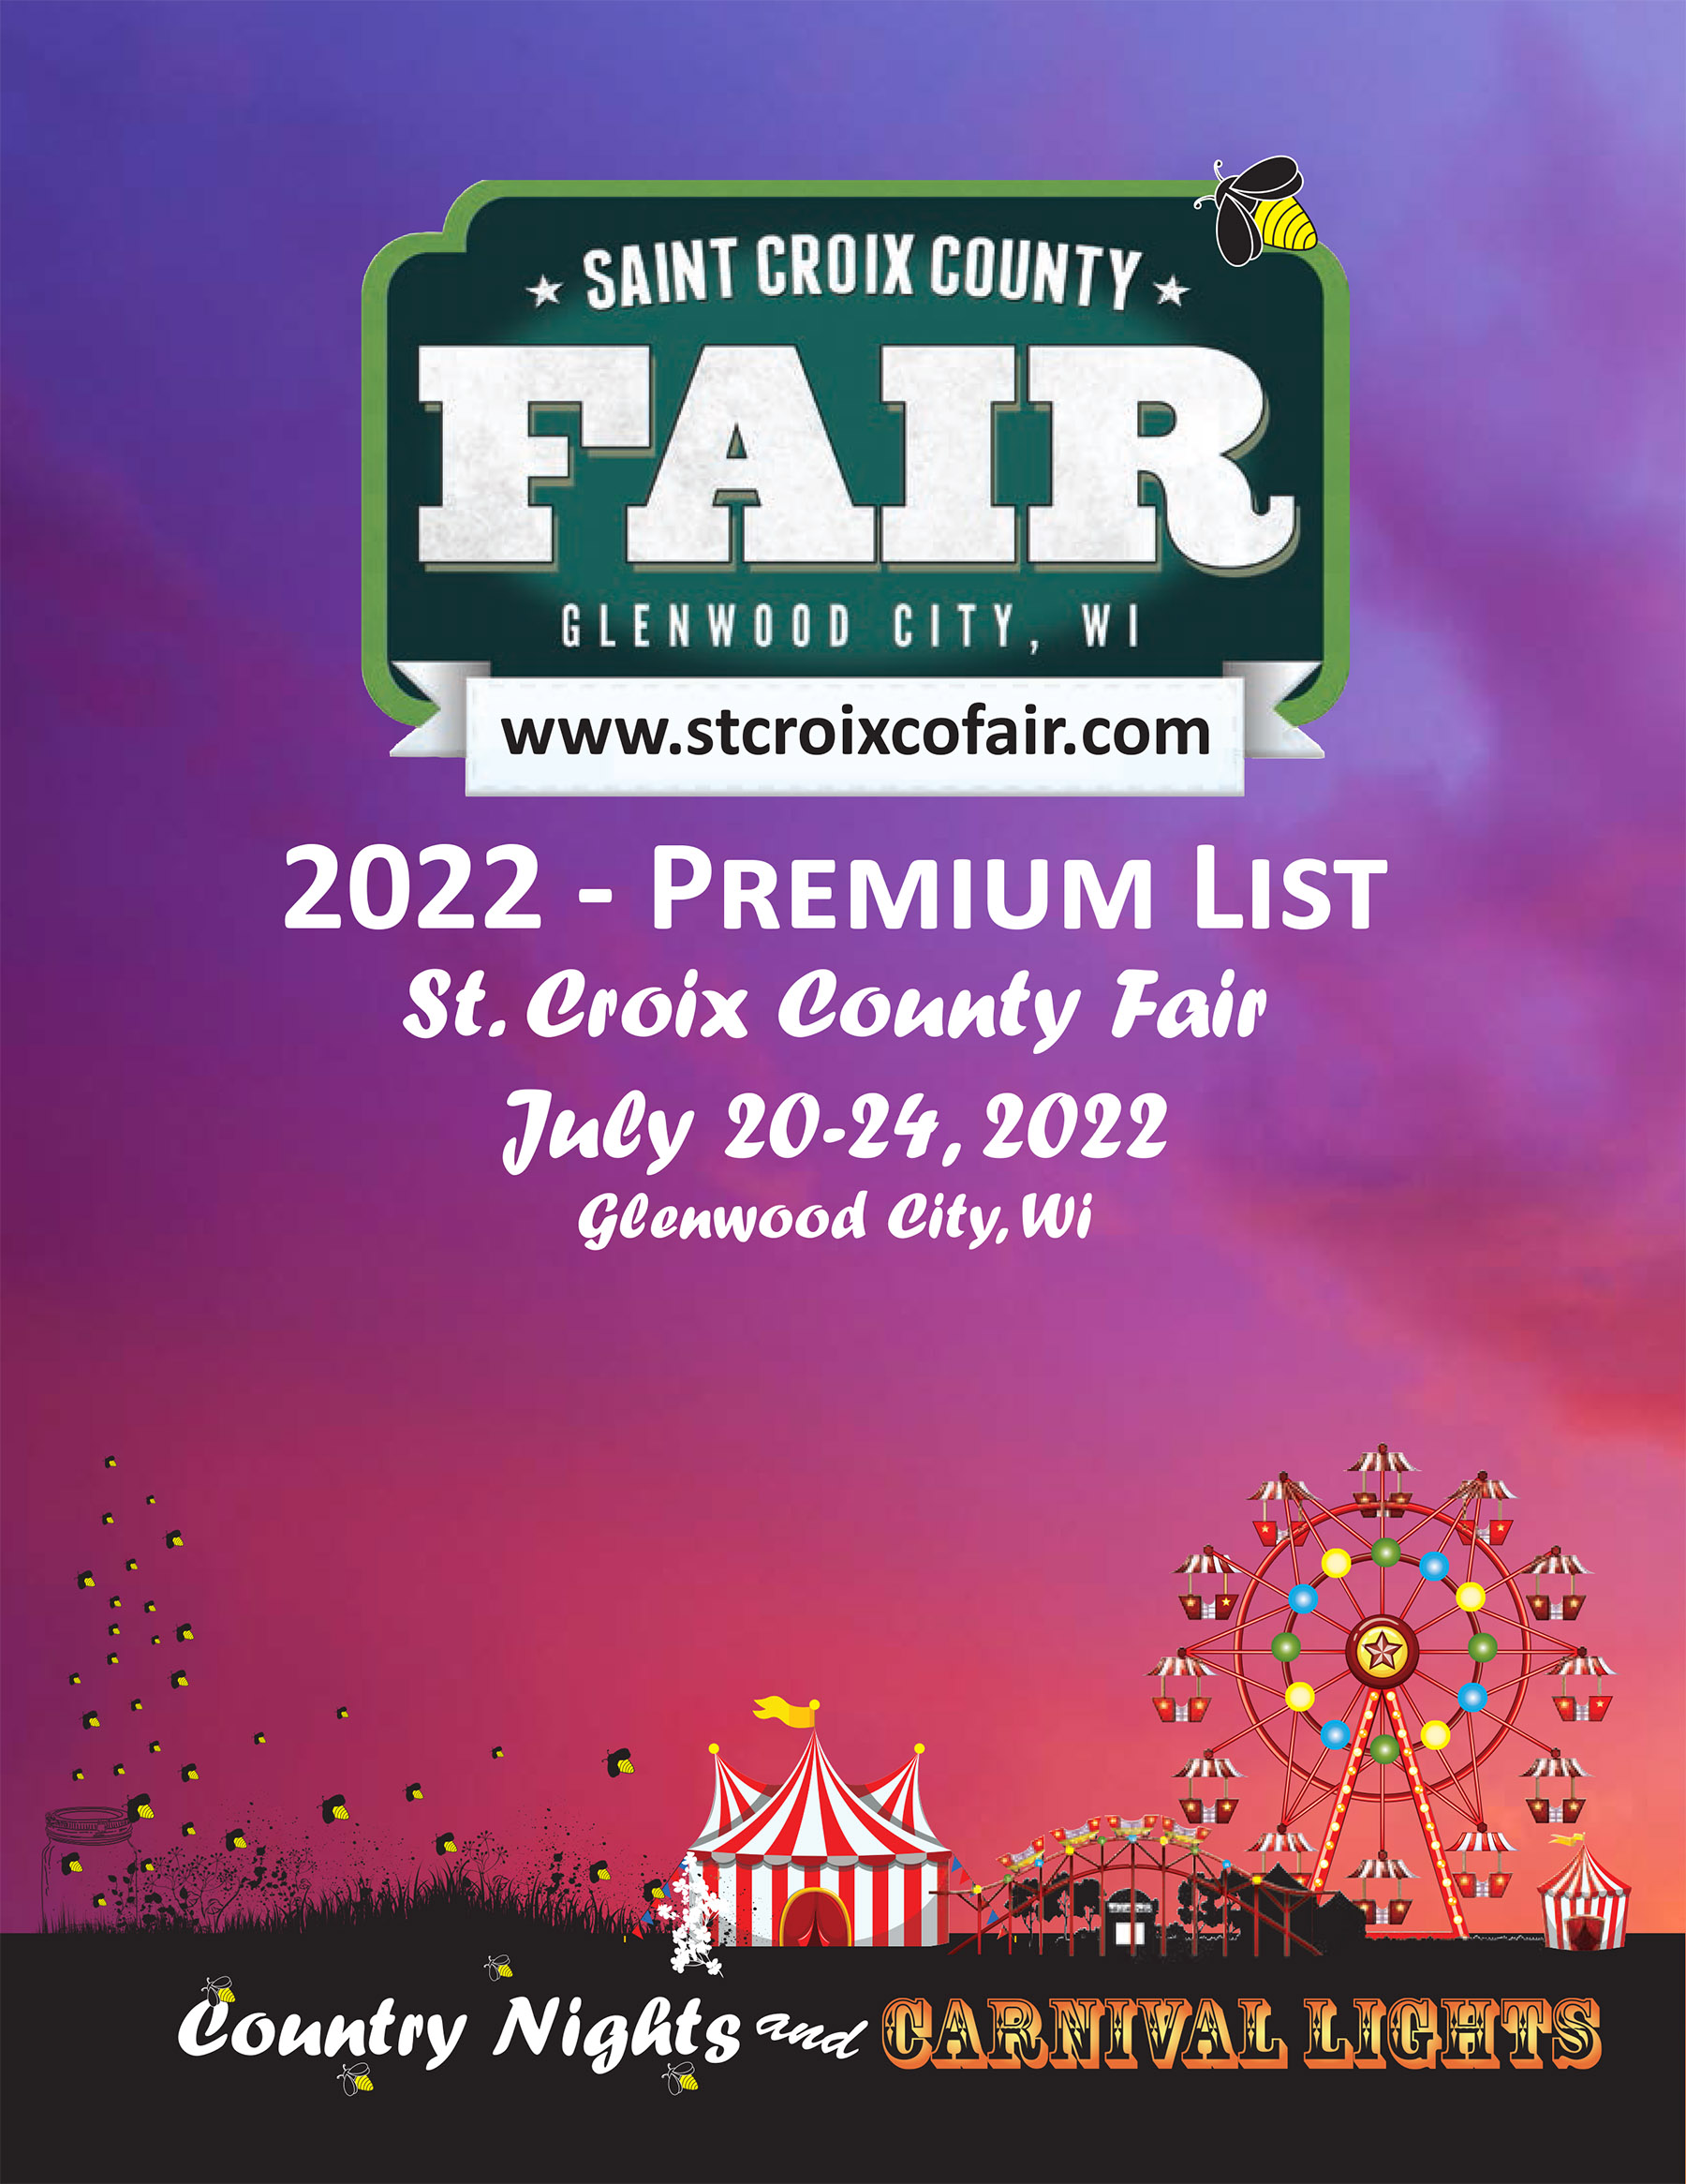 St. Croix County Fair News